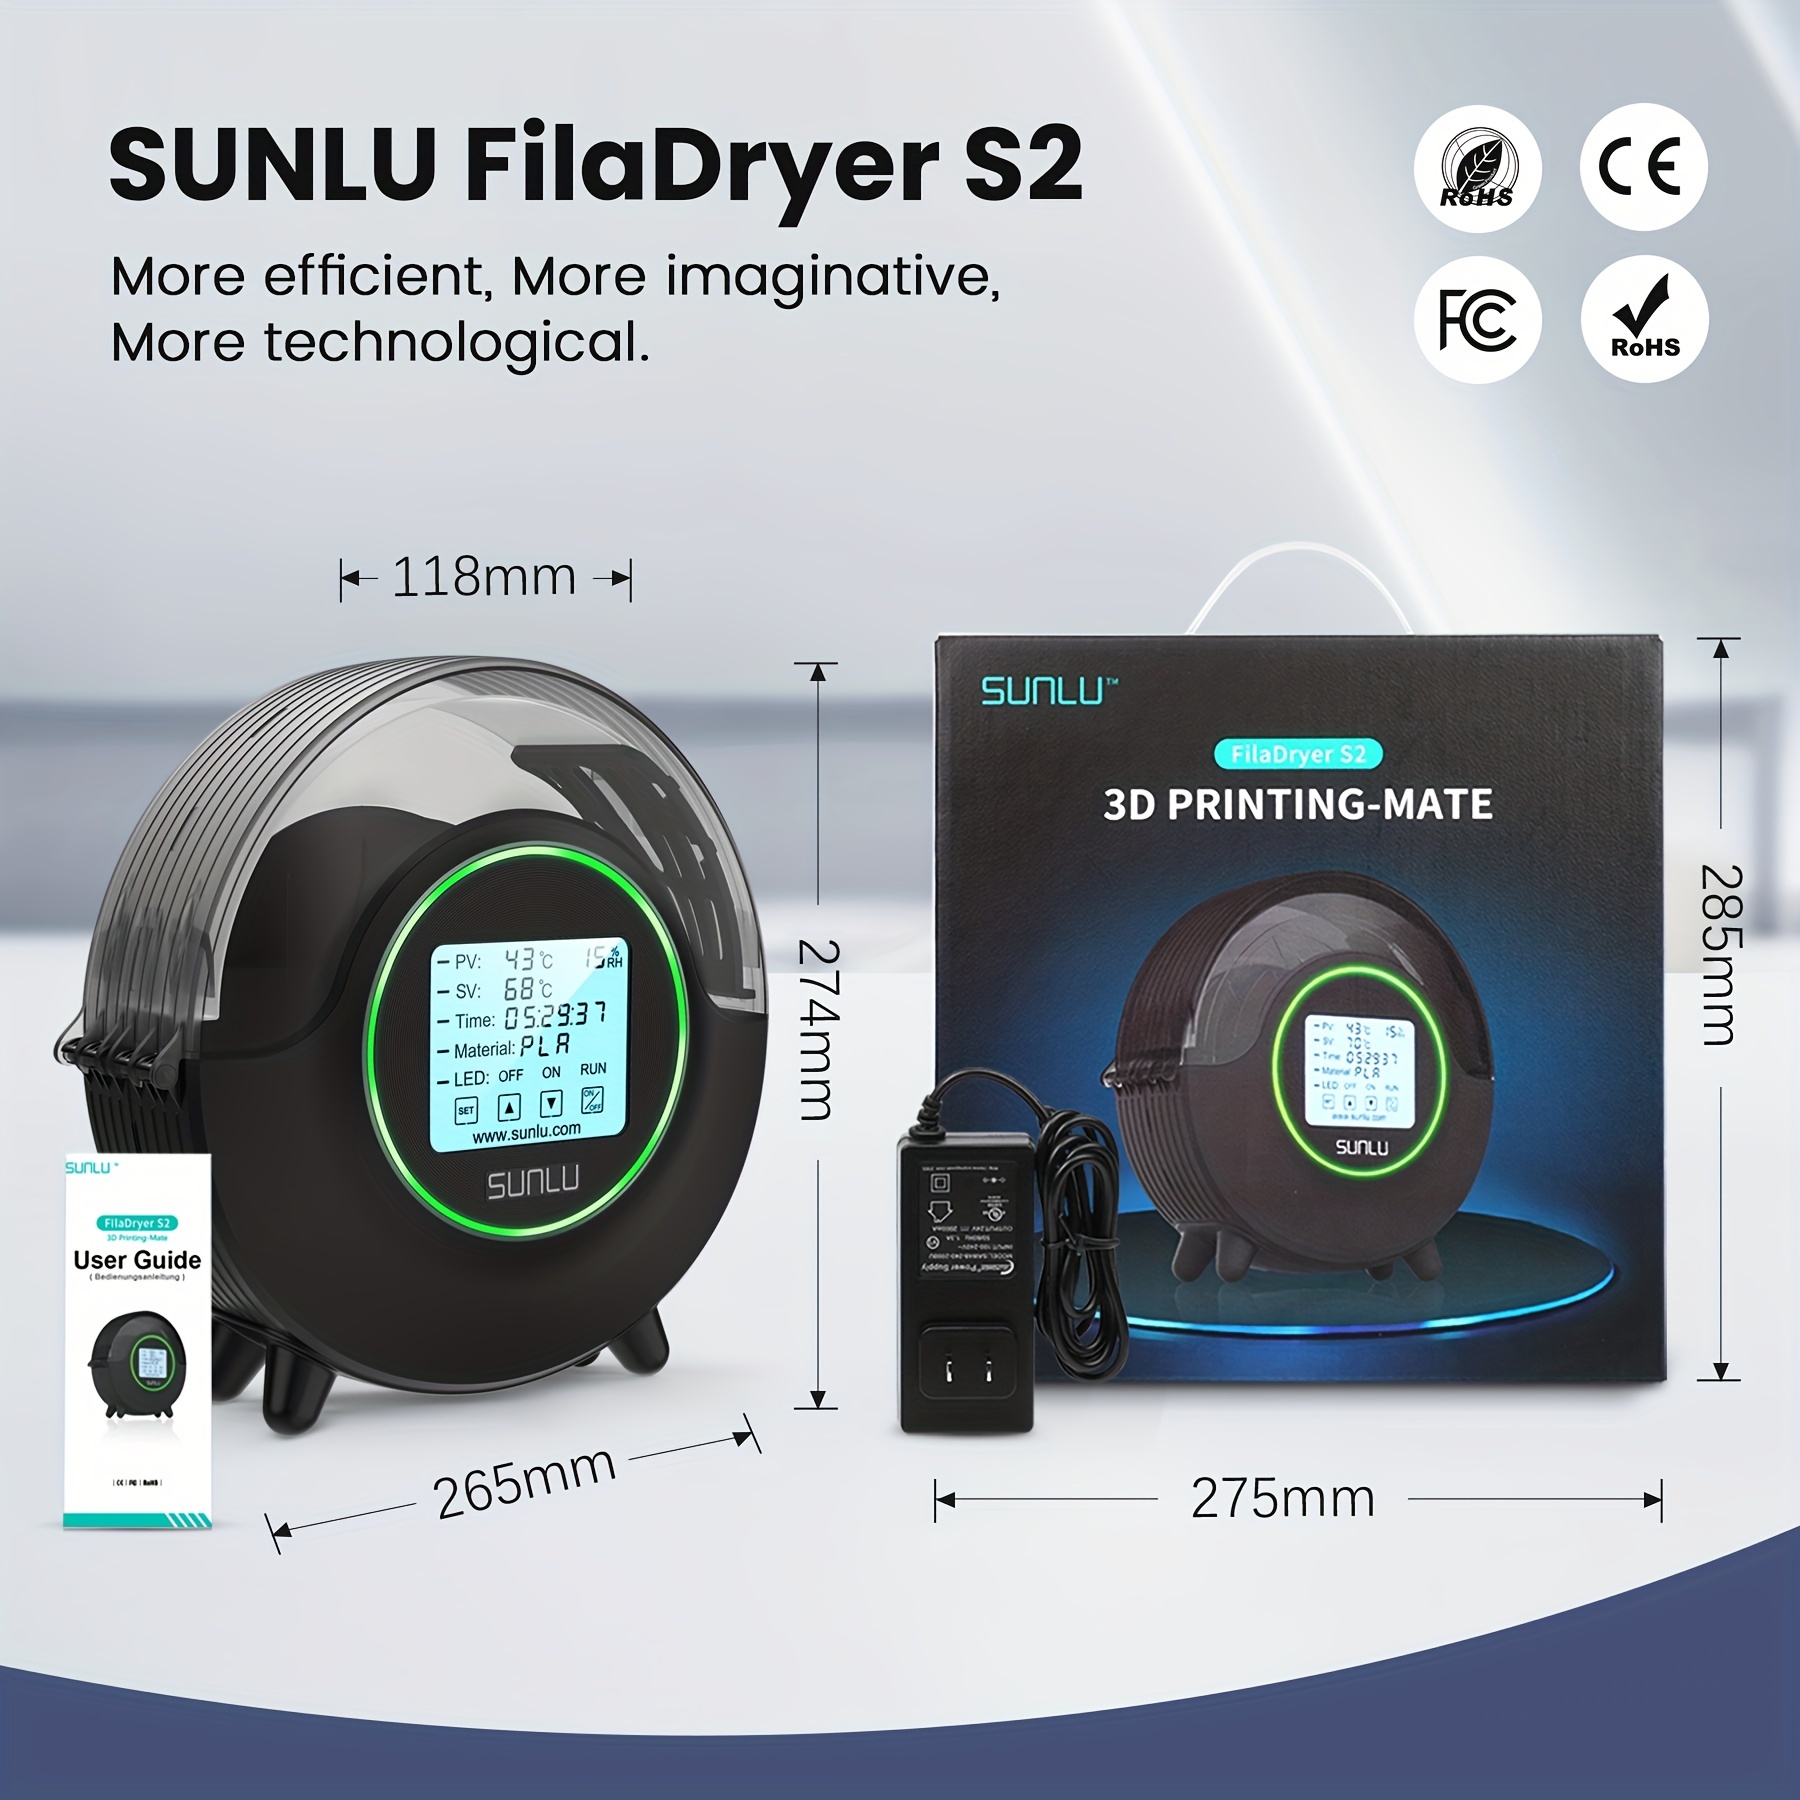 Sunlu FilaDryer S2 Review